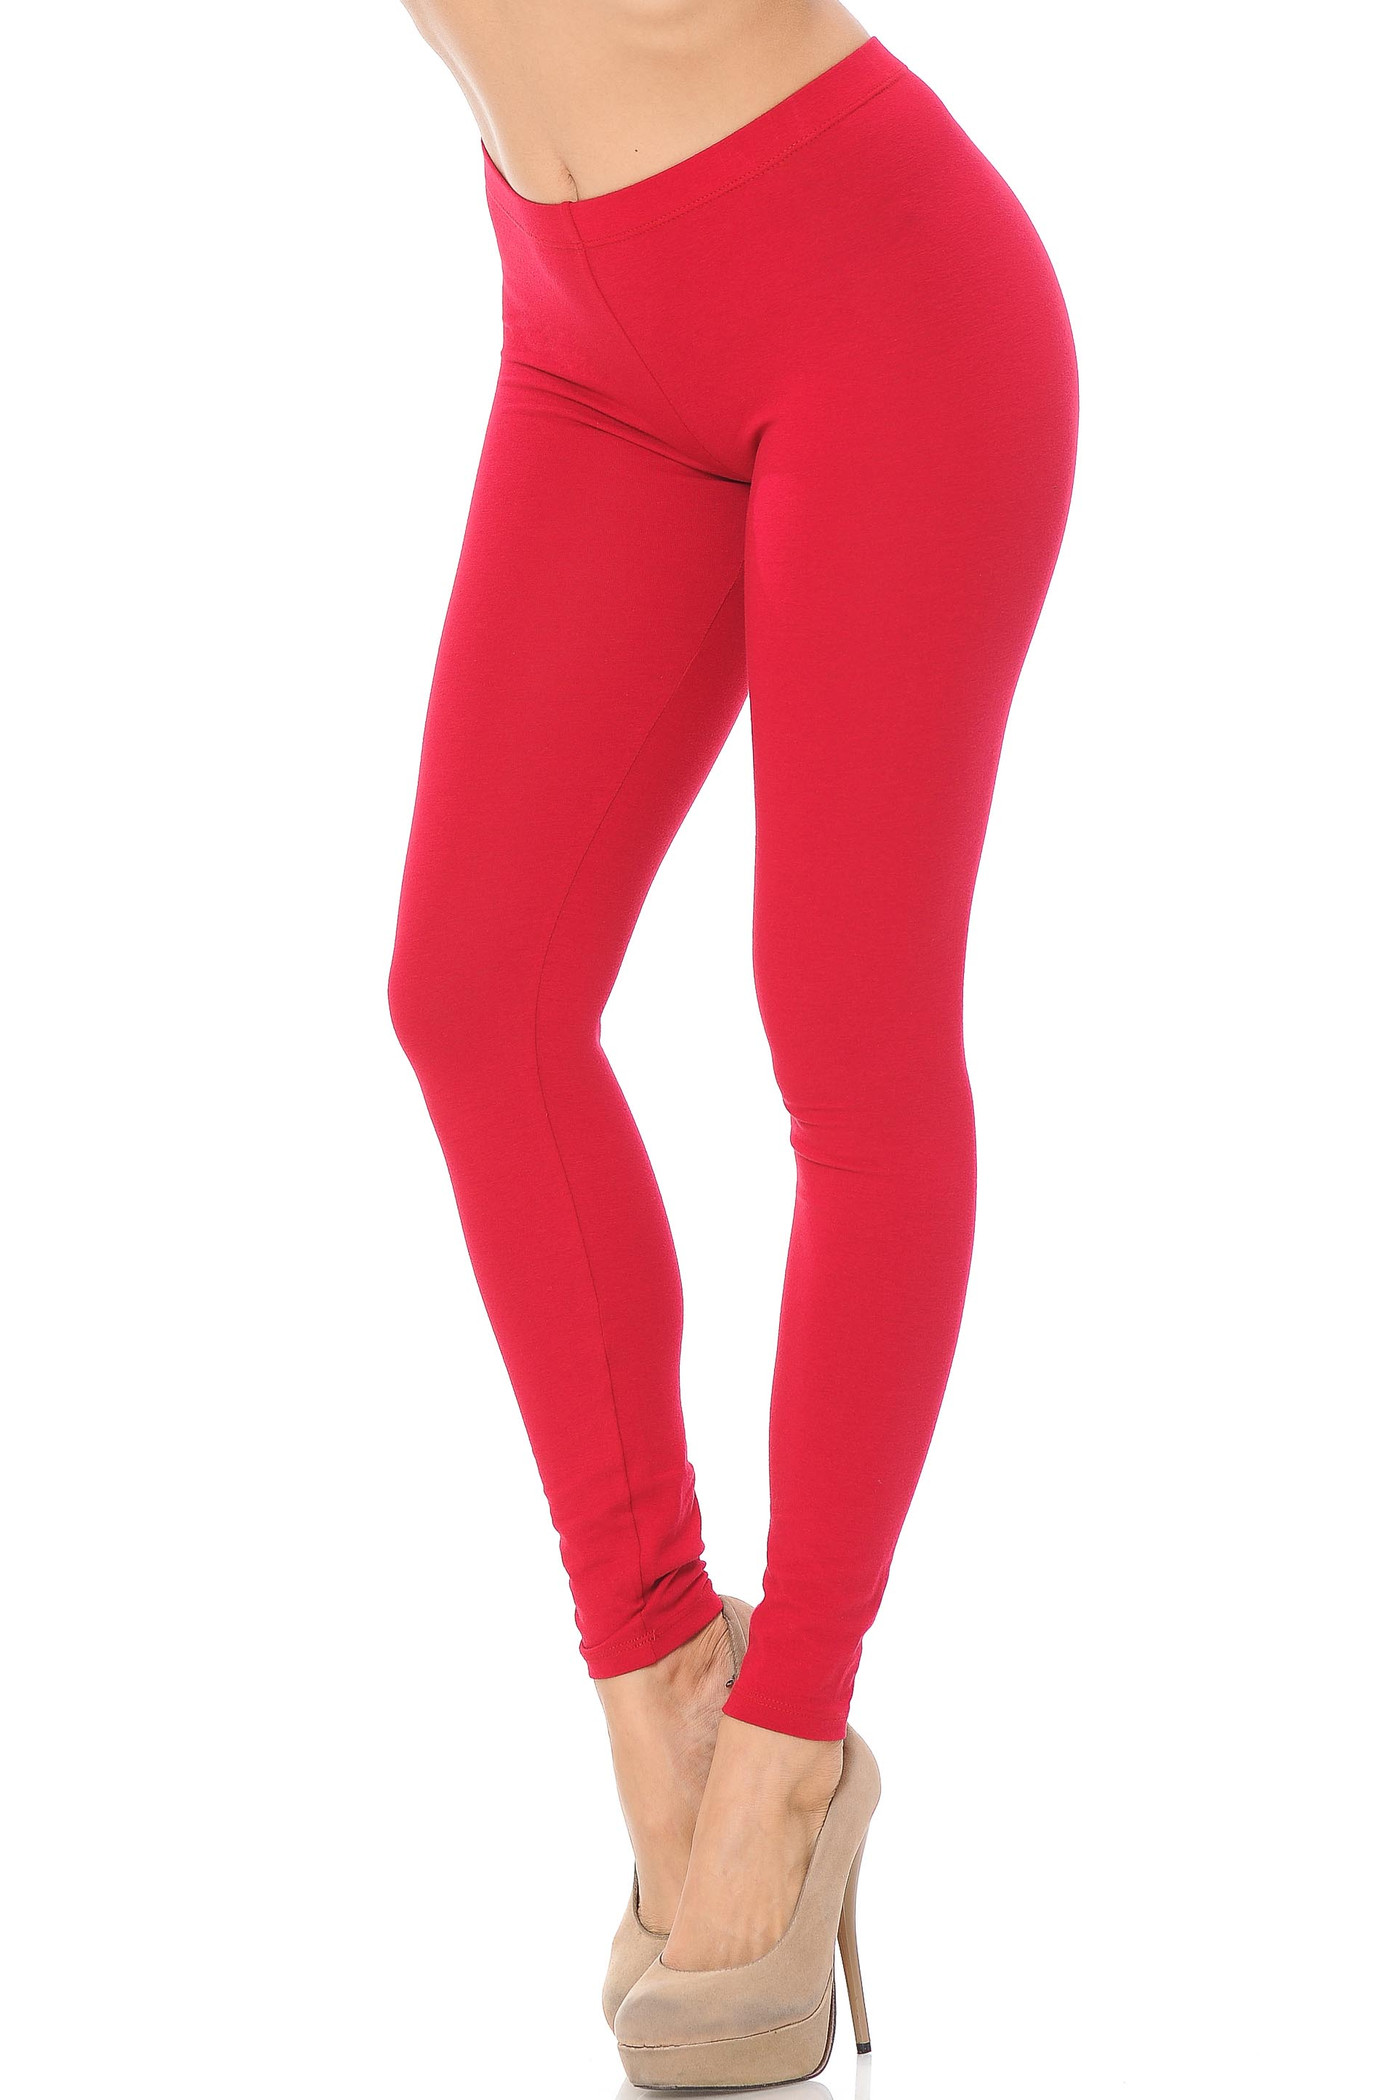 Women's Cotton Spandex Yoga Pant | Royal Wholesale